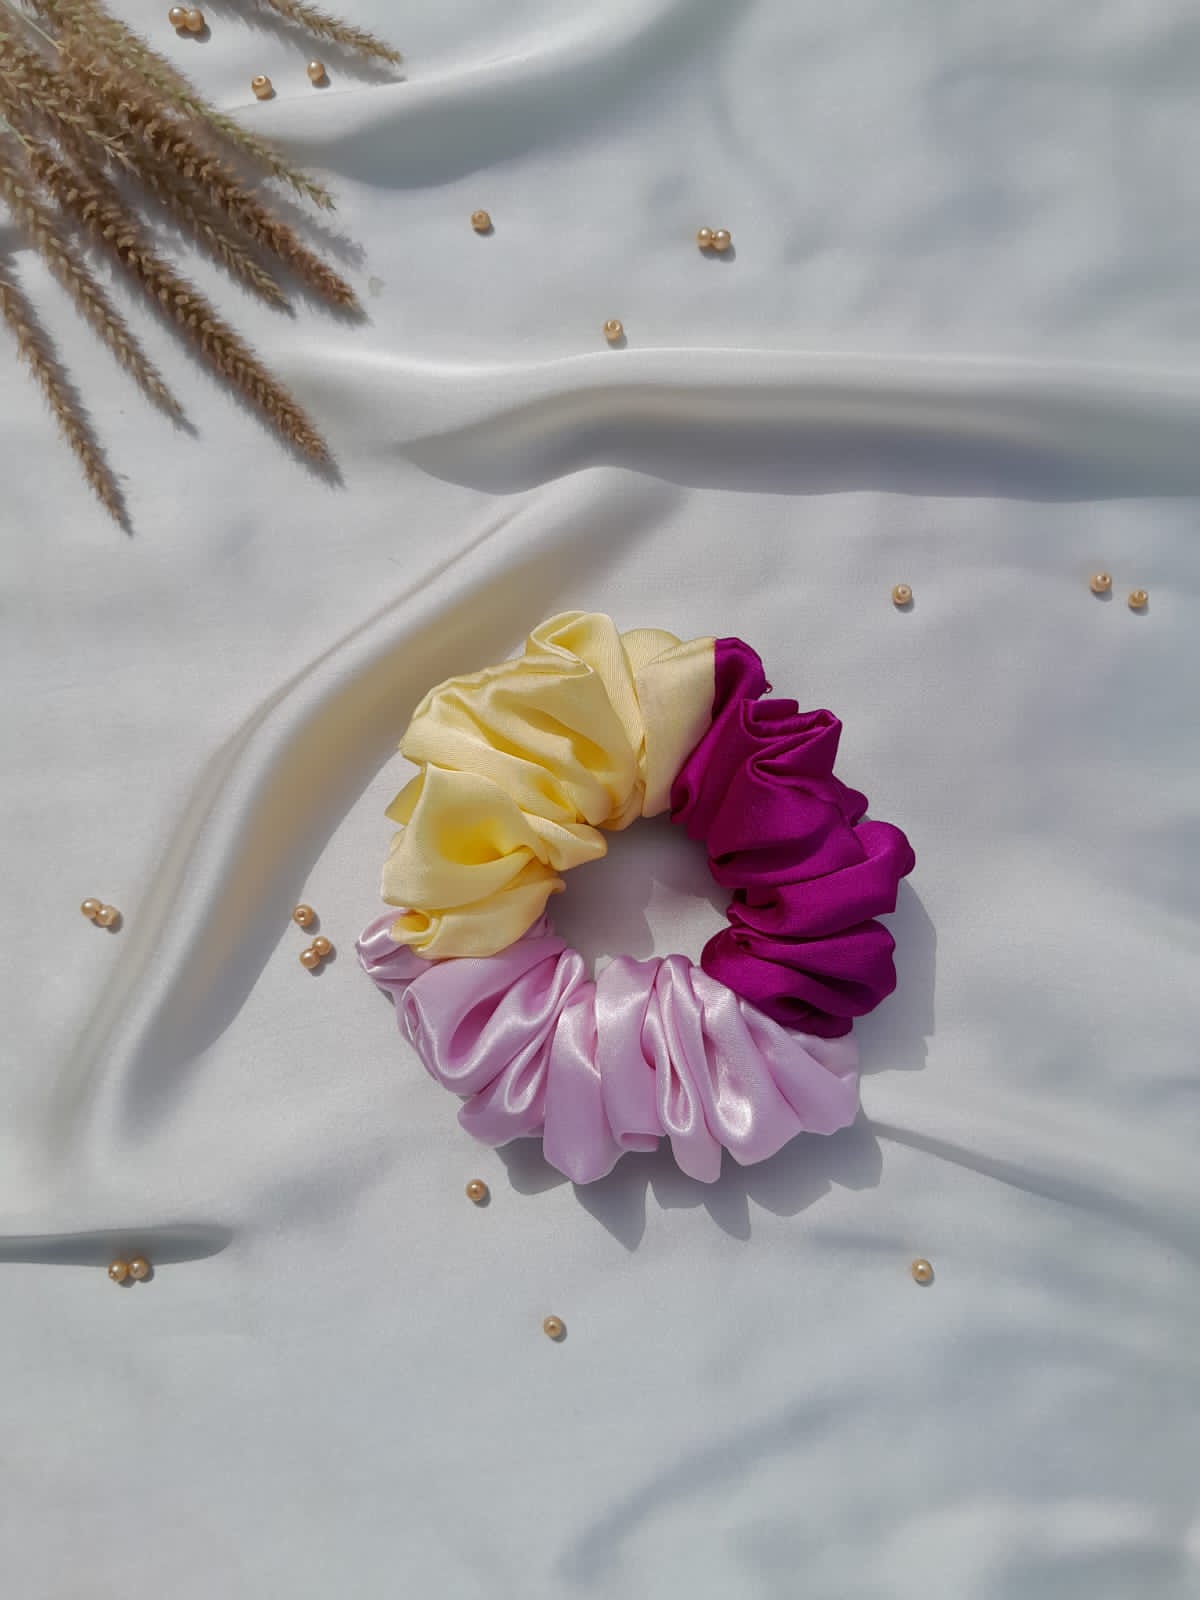 1Pcs High Quality Silk Scrunchies - Trio Colors (Random colour)